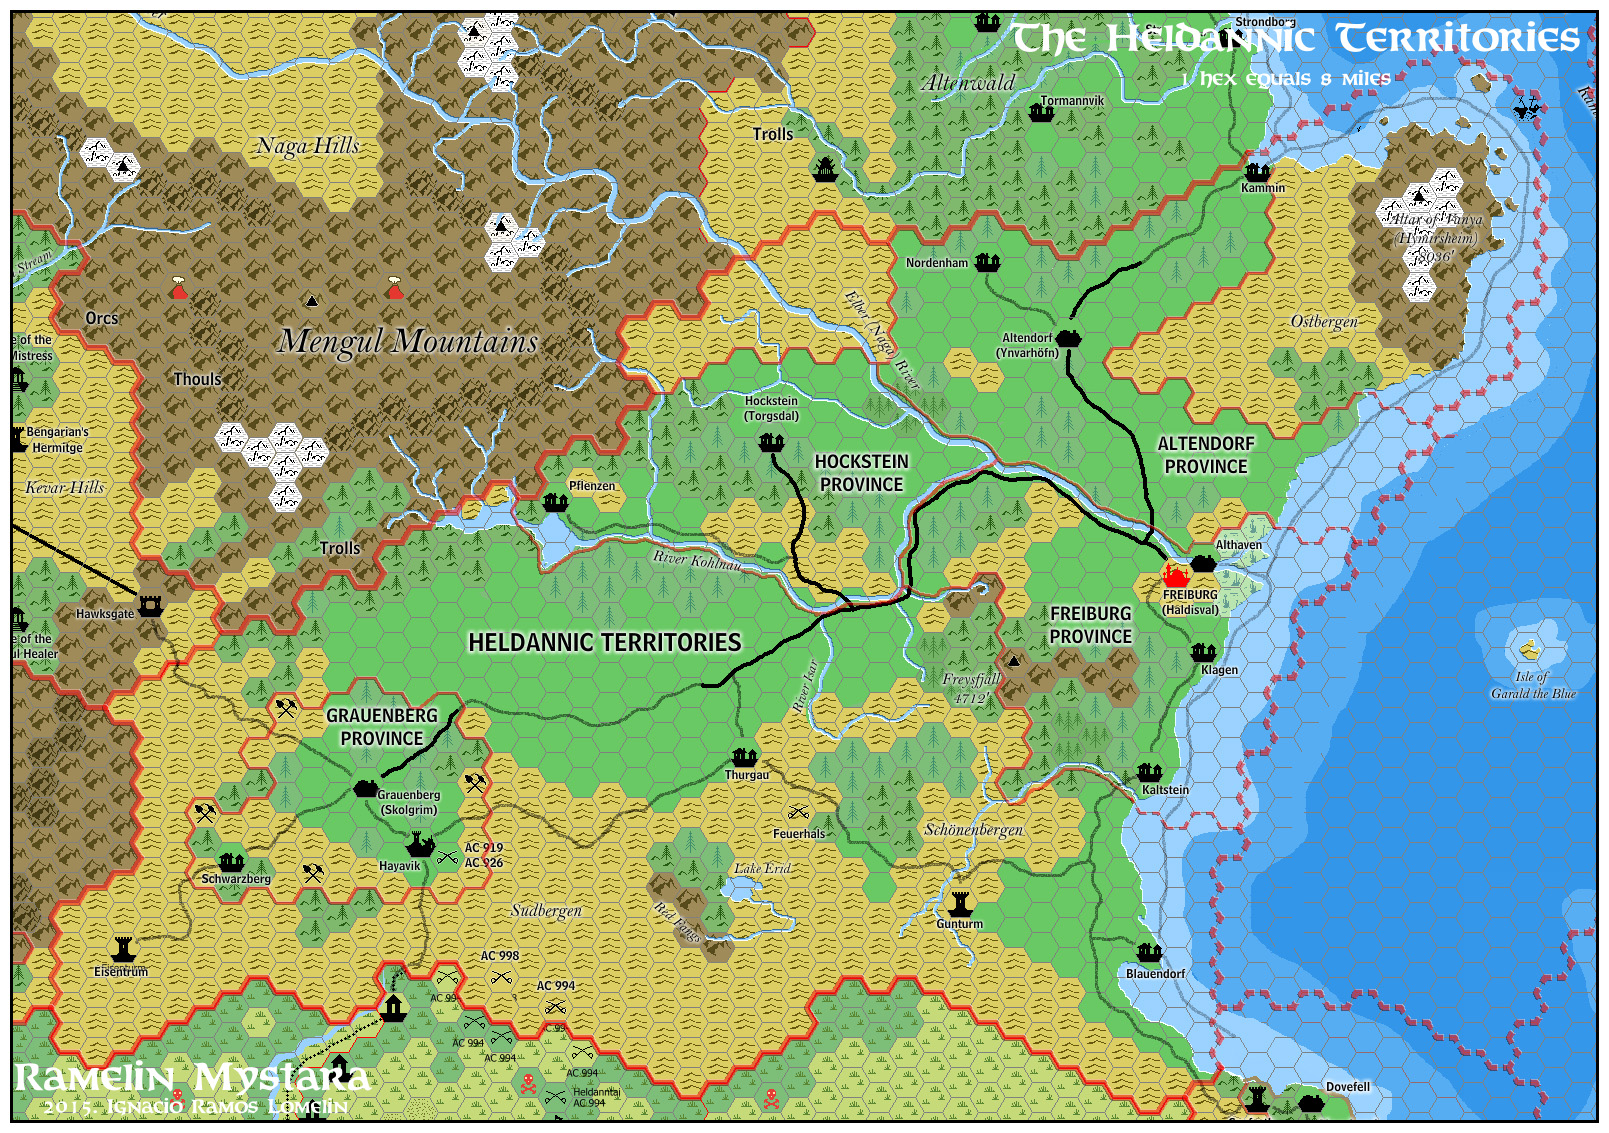 The Heldannic Territories, 8 miles per hex by Jose Ignacio Ramos Lomelin, November 2015 (version 1)